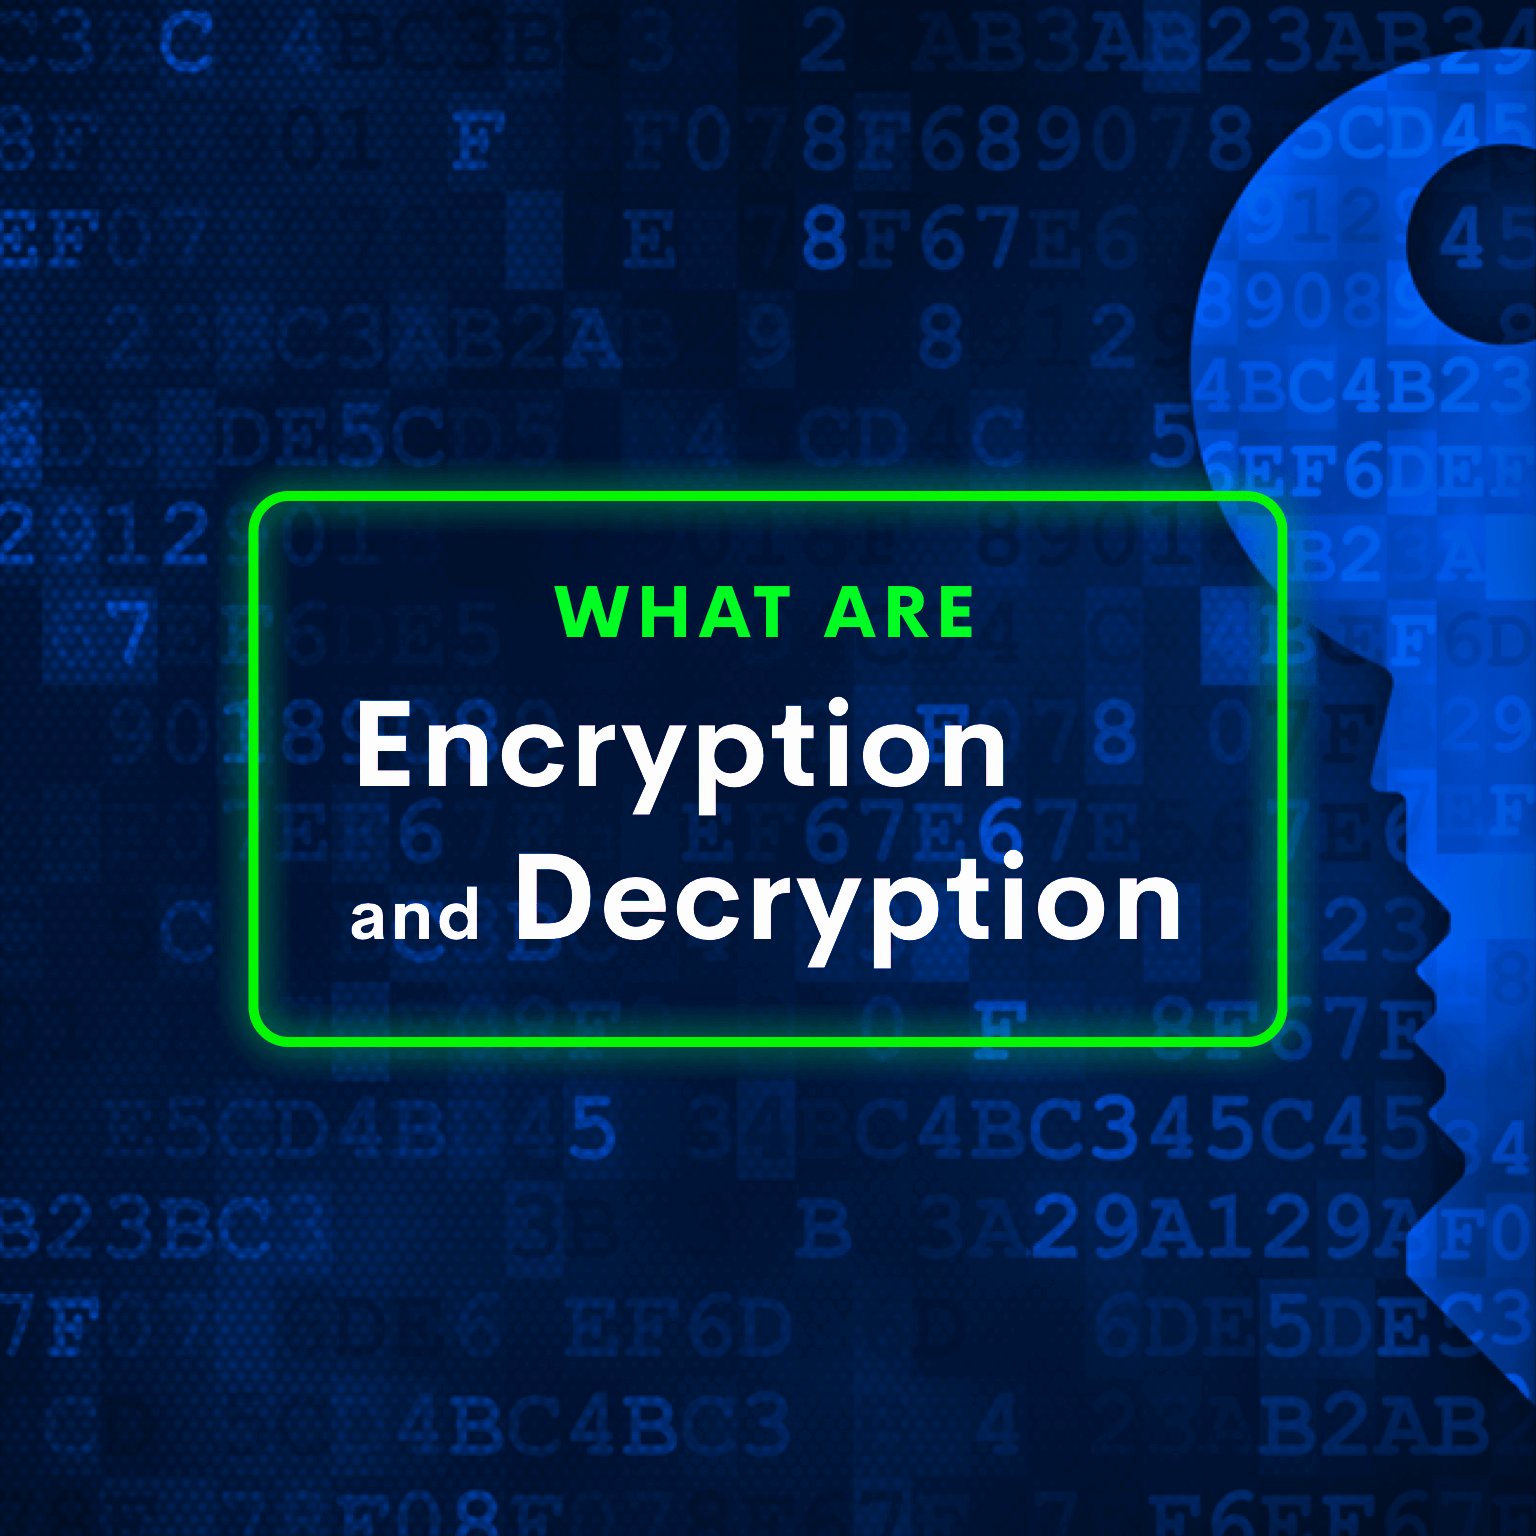 encryption decryption image 1